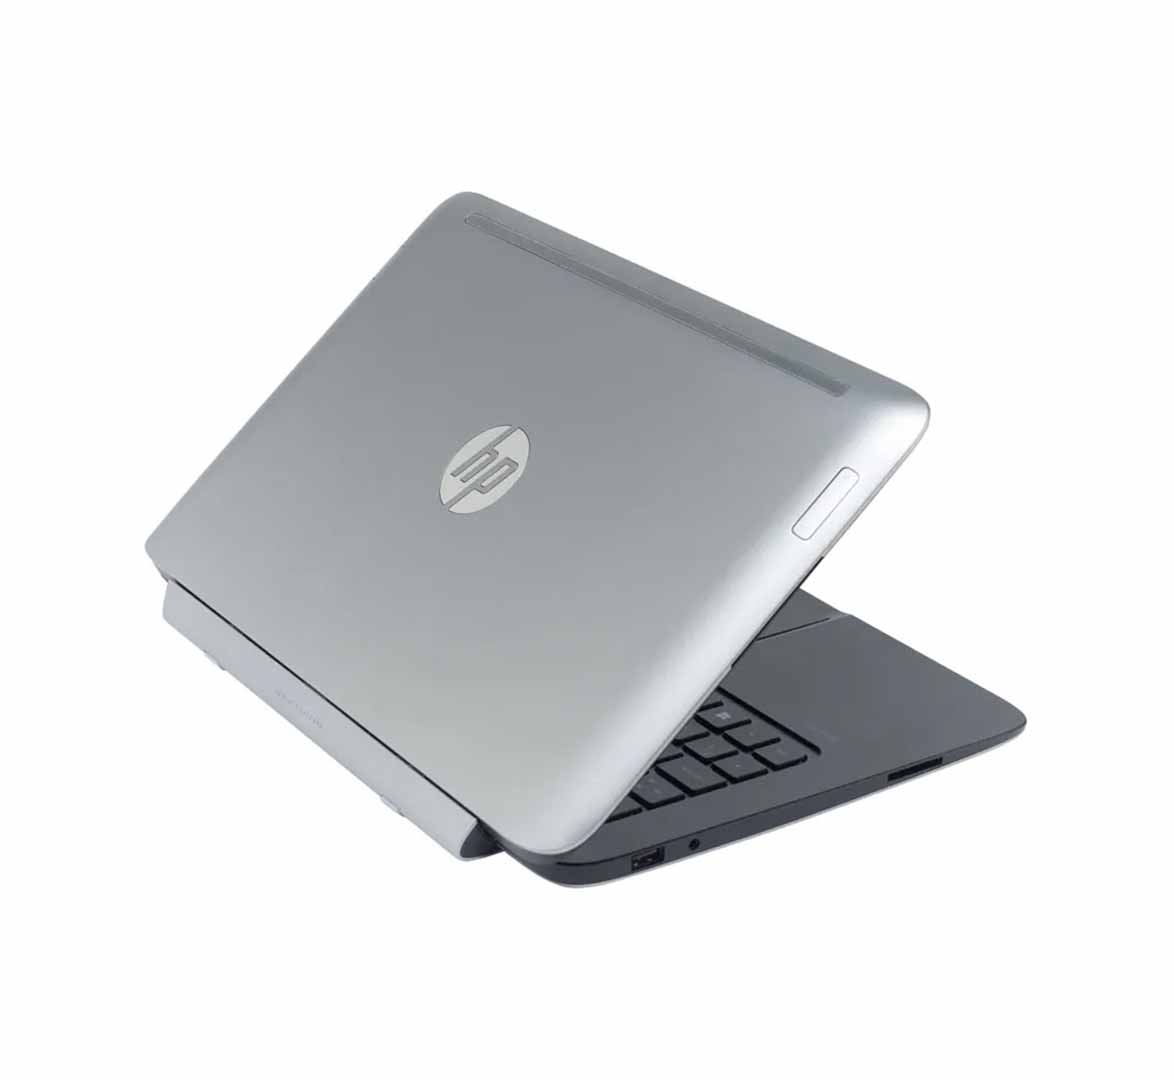 HP Split 13 x2 Business Laptop, Intel Core i3-4th Gen CPU, 4GB RAM, 128GB SSD, 13.3 inch Touchscreen, Windows 10 Pro, Refurbished Laptop